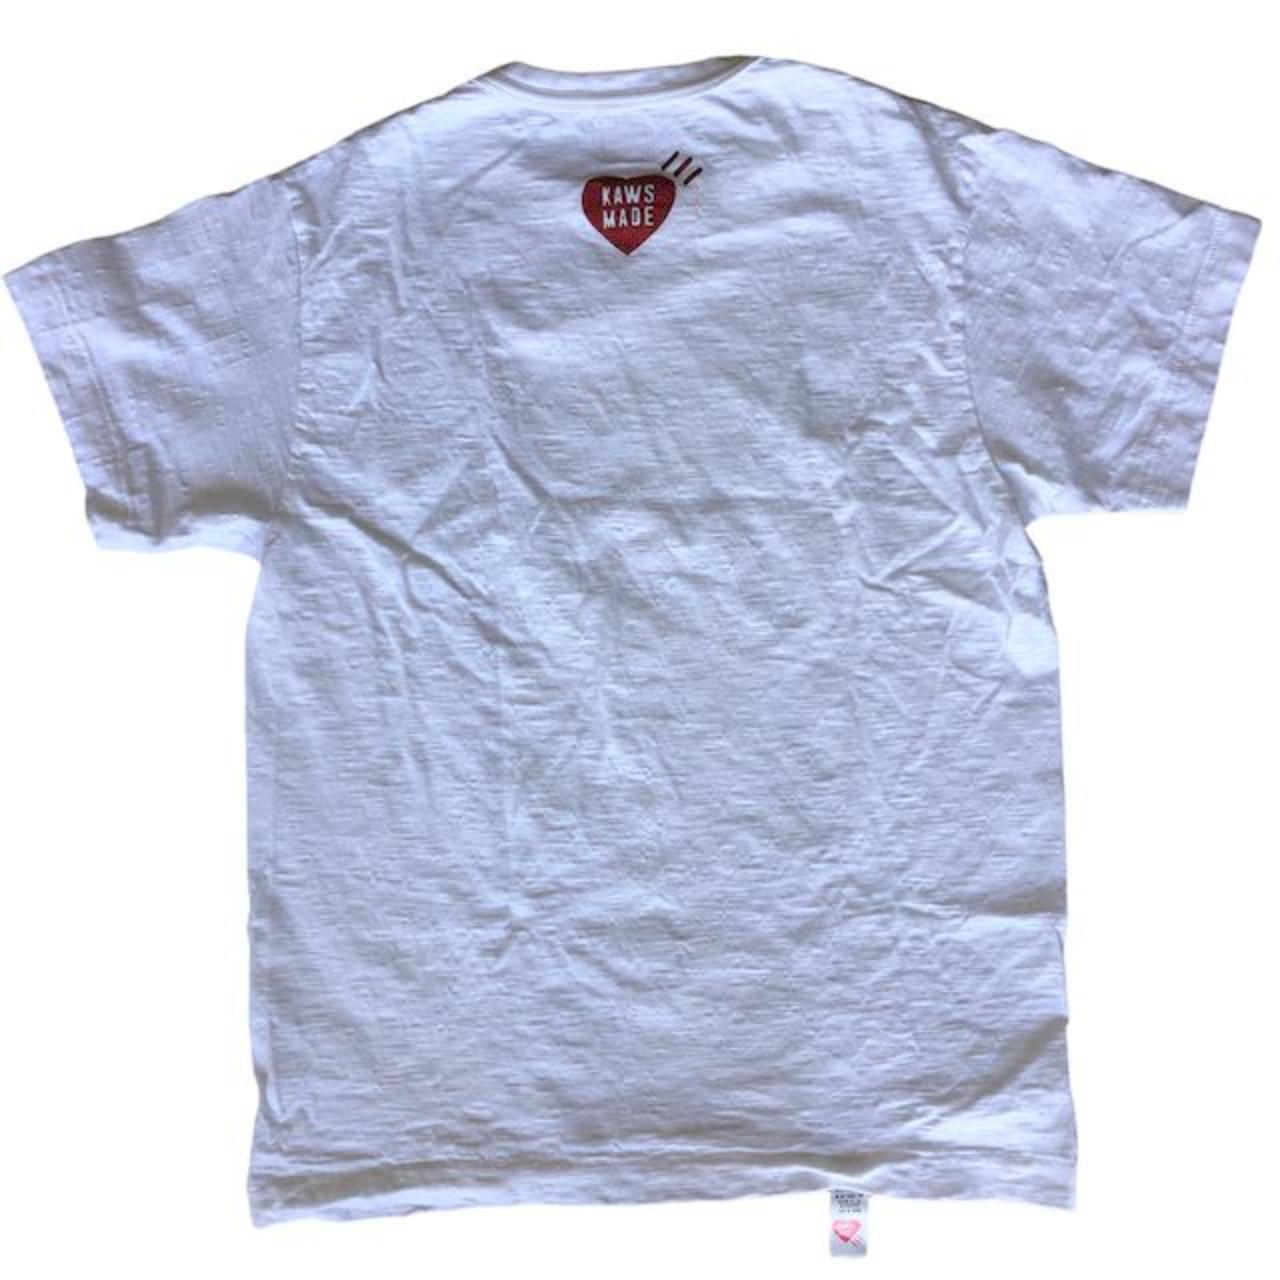 Human Made x Kaws T-shirt #2, White Human Made x